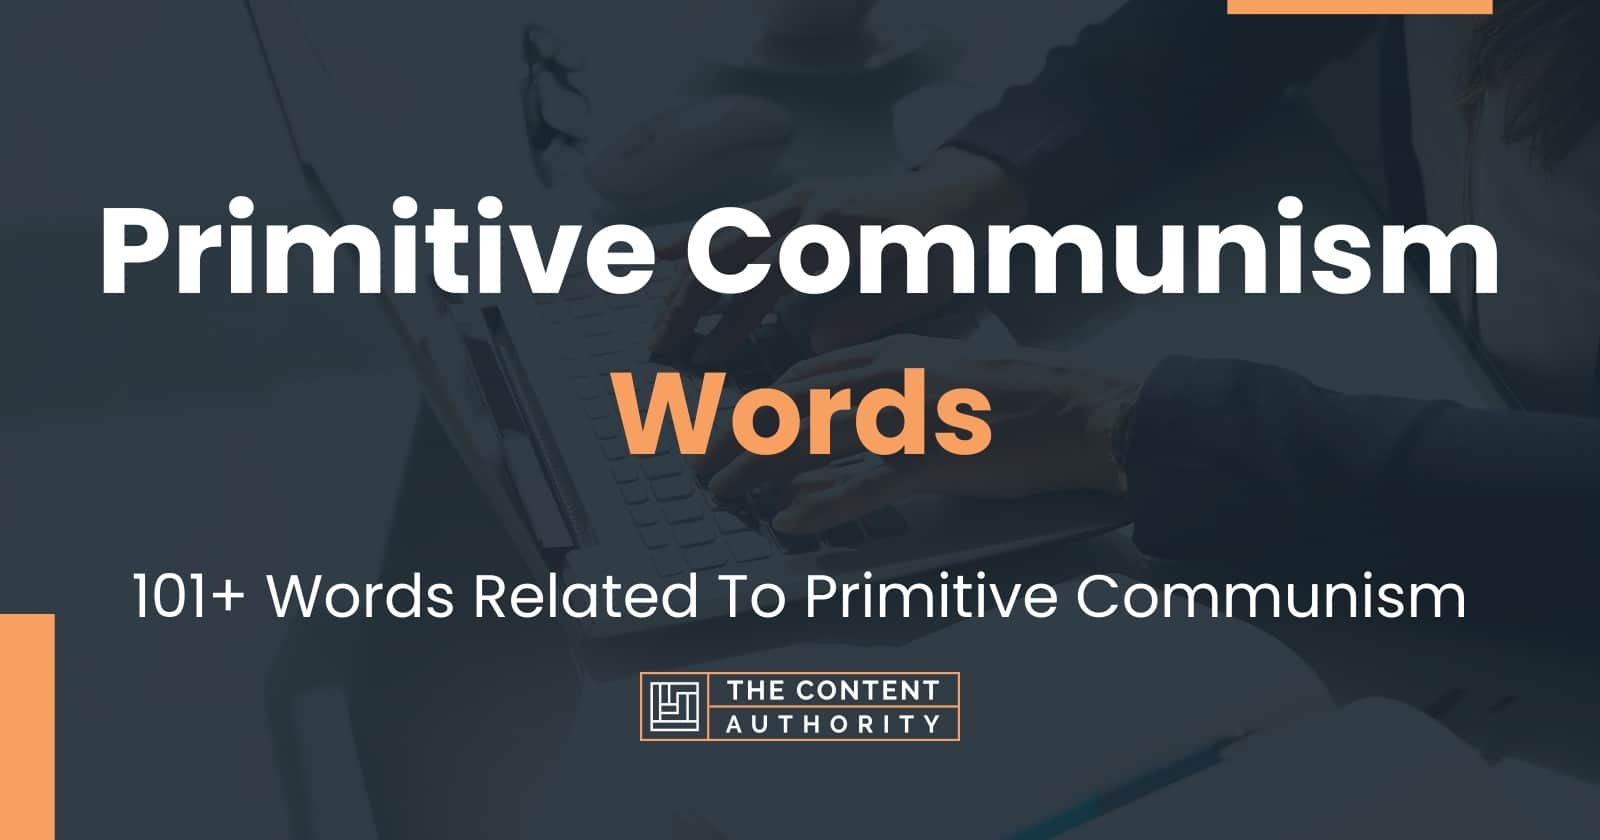 Primitive Communism Words - 101+ Words Related To Primitive Communism